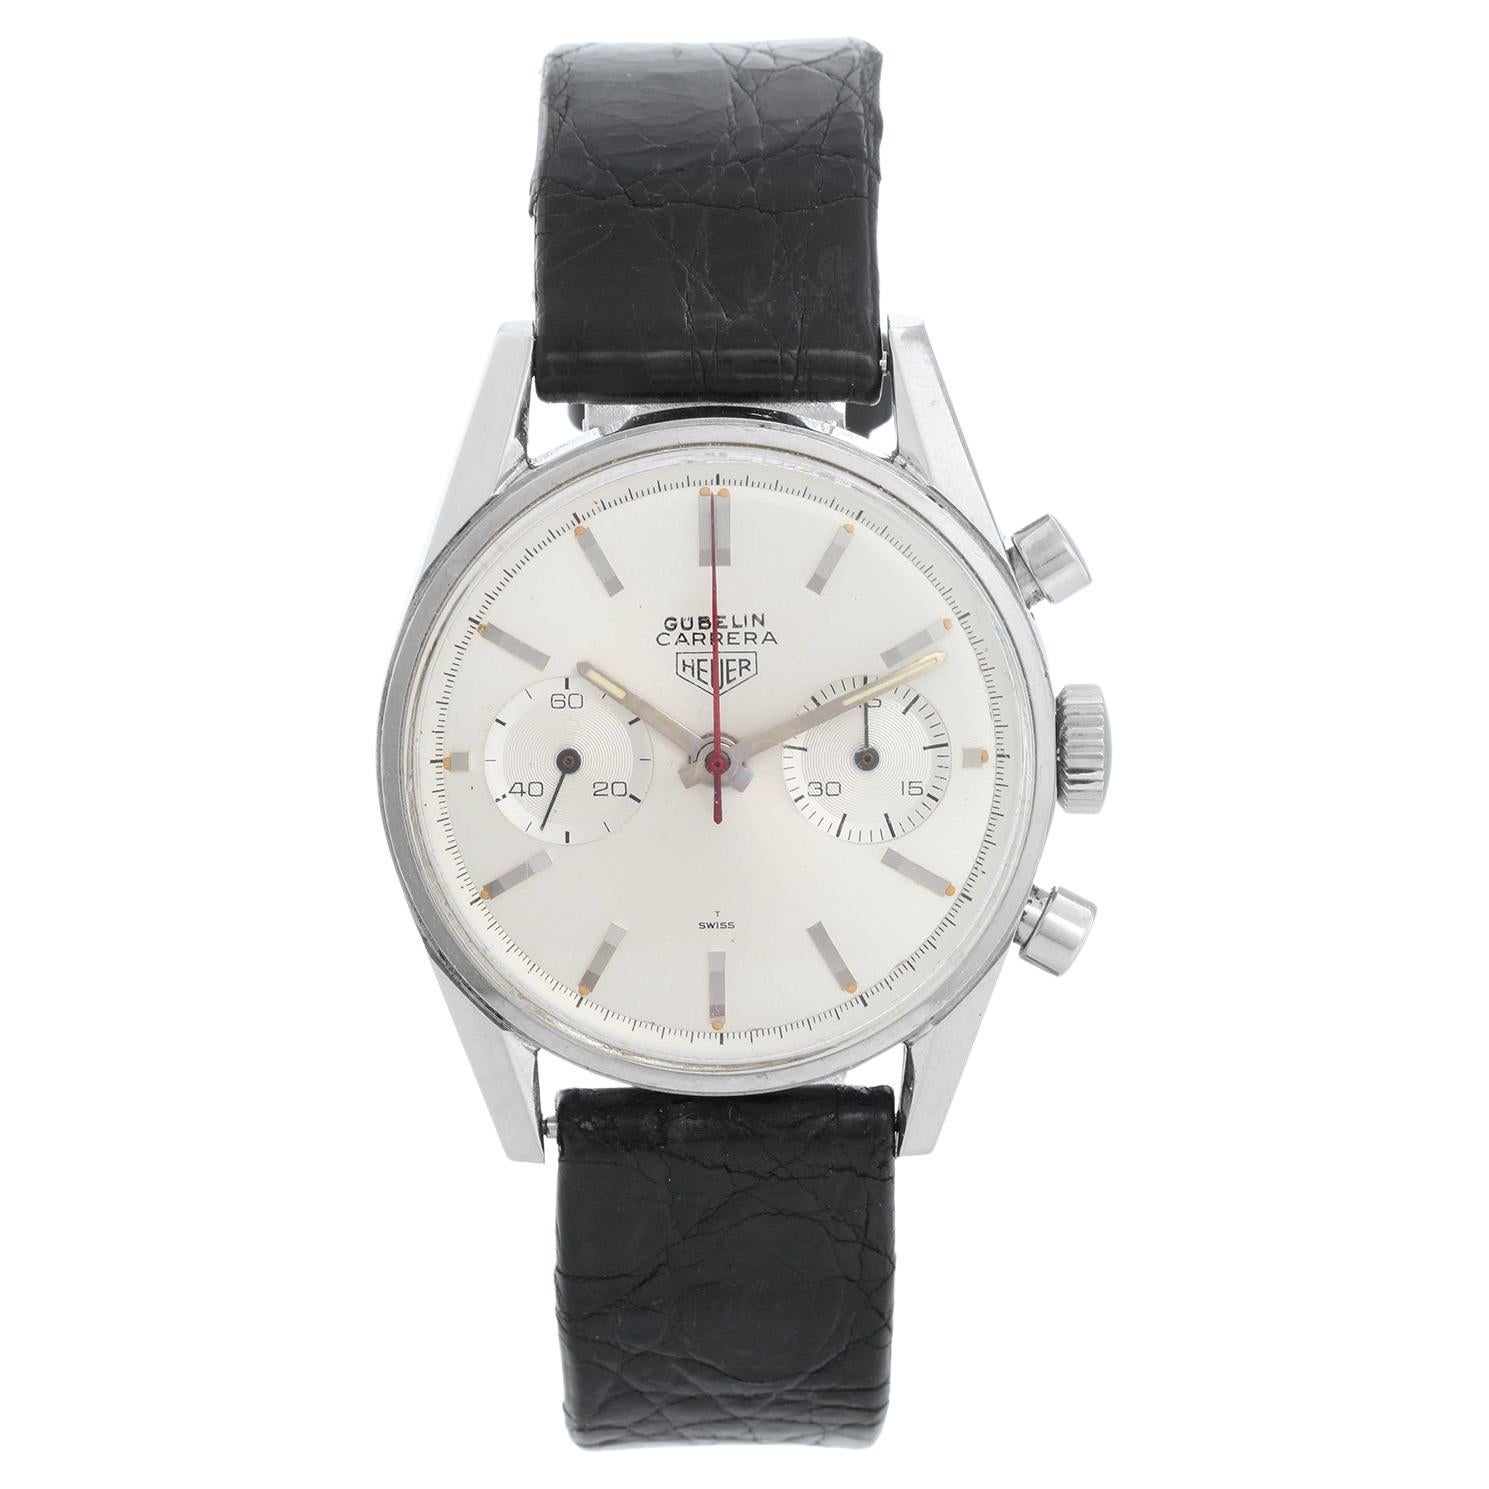 Tag Heuer Carrera "Gübelin" Men's Steel Chronograph Watch Ref 3647S For Sale